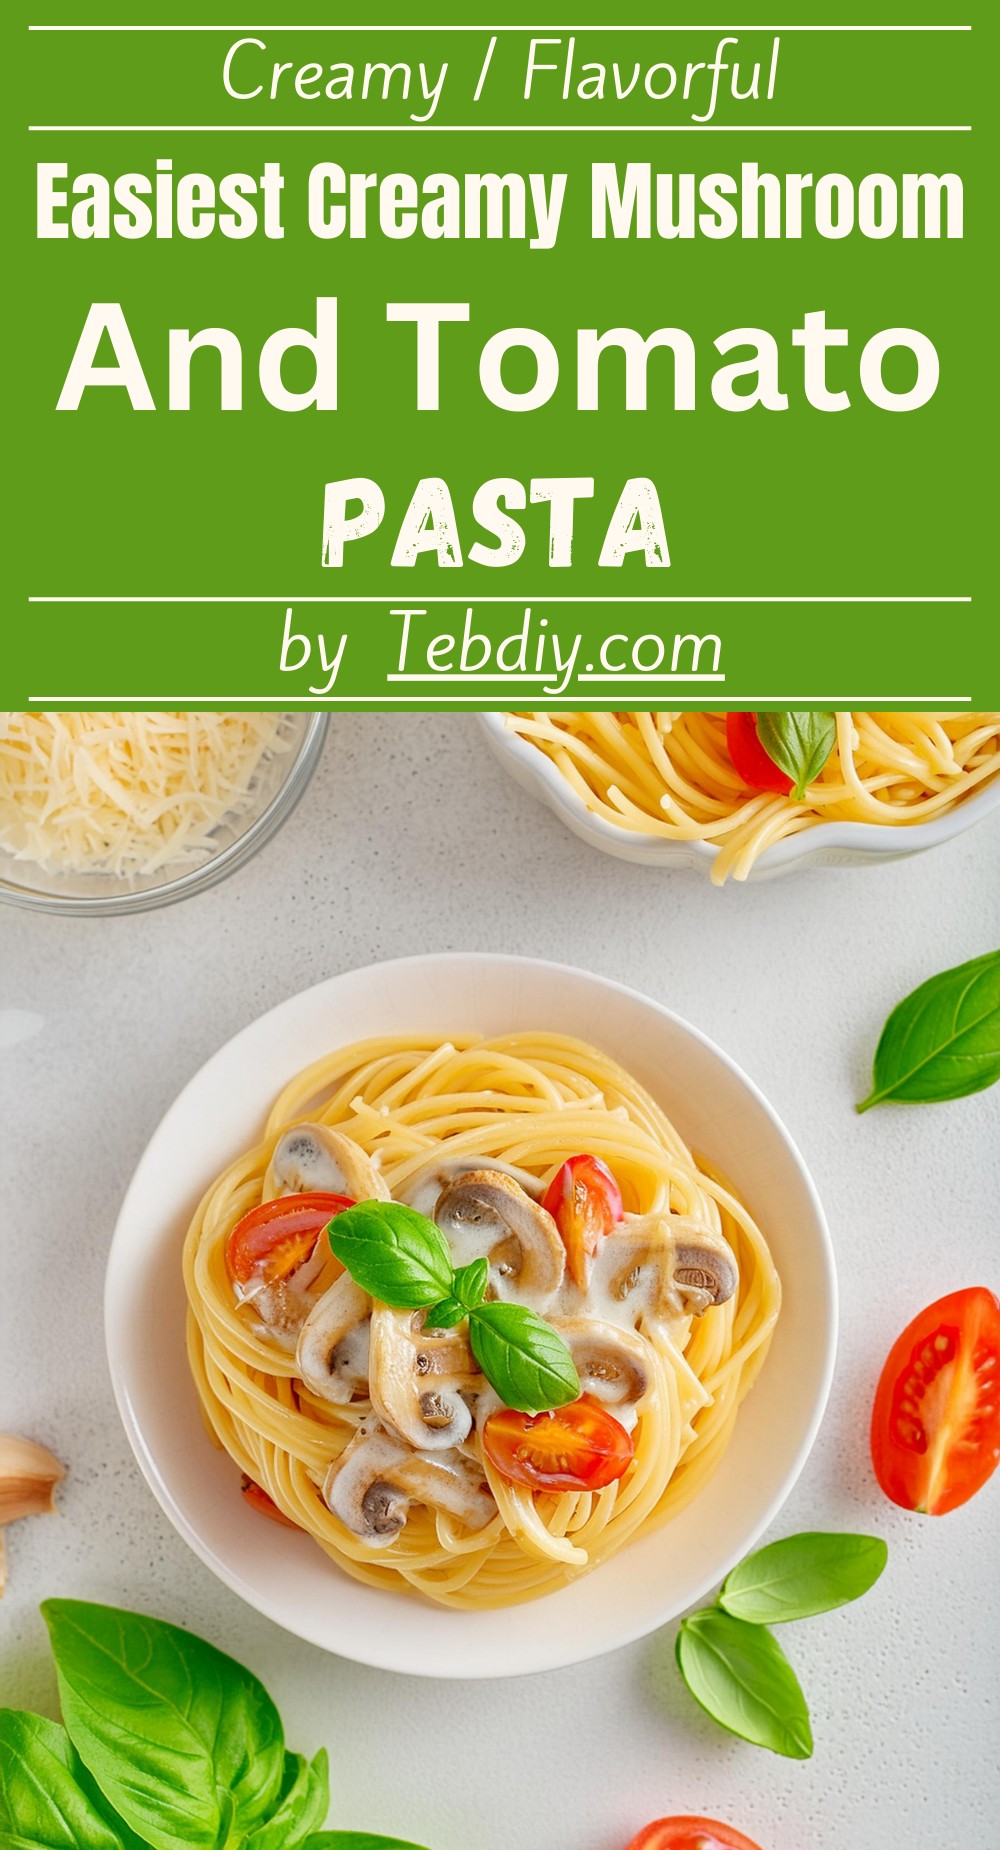 Easiest Creamy Mushroom And Tomato Pasta